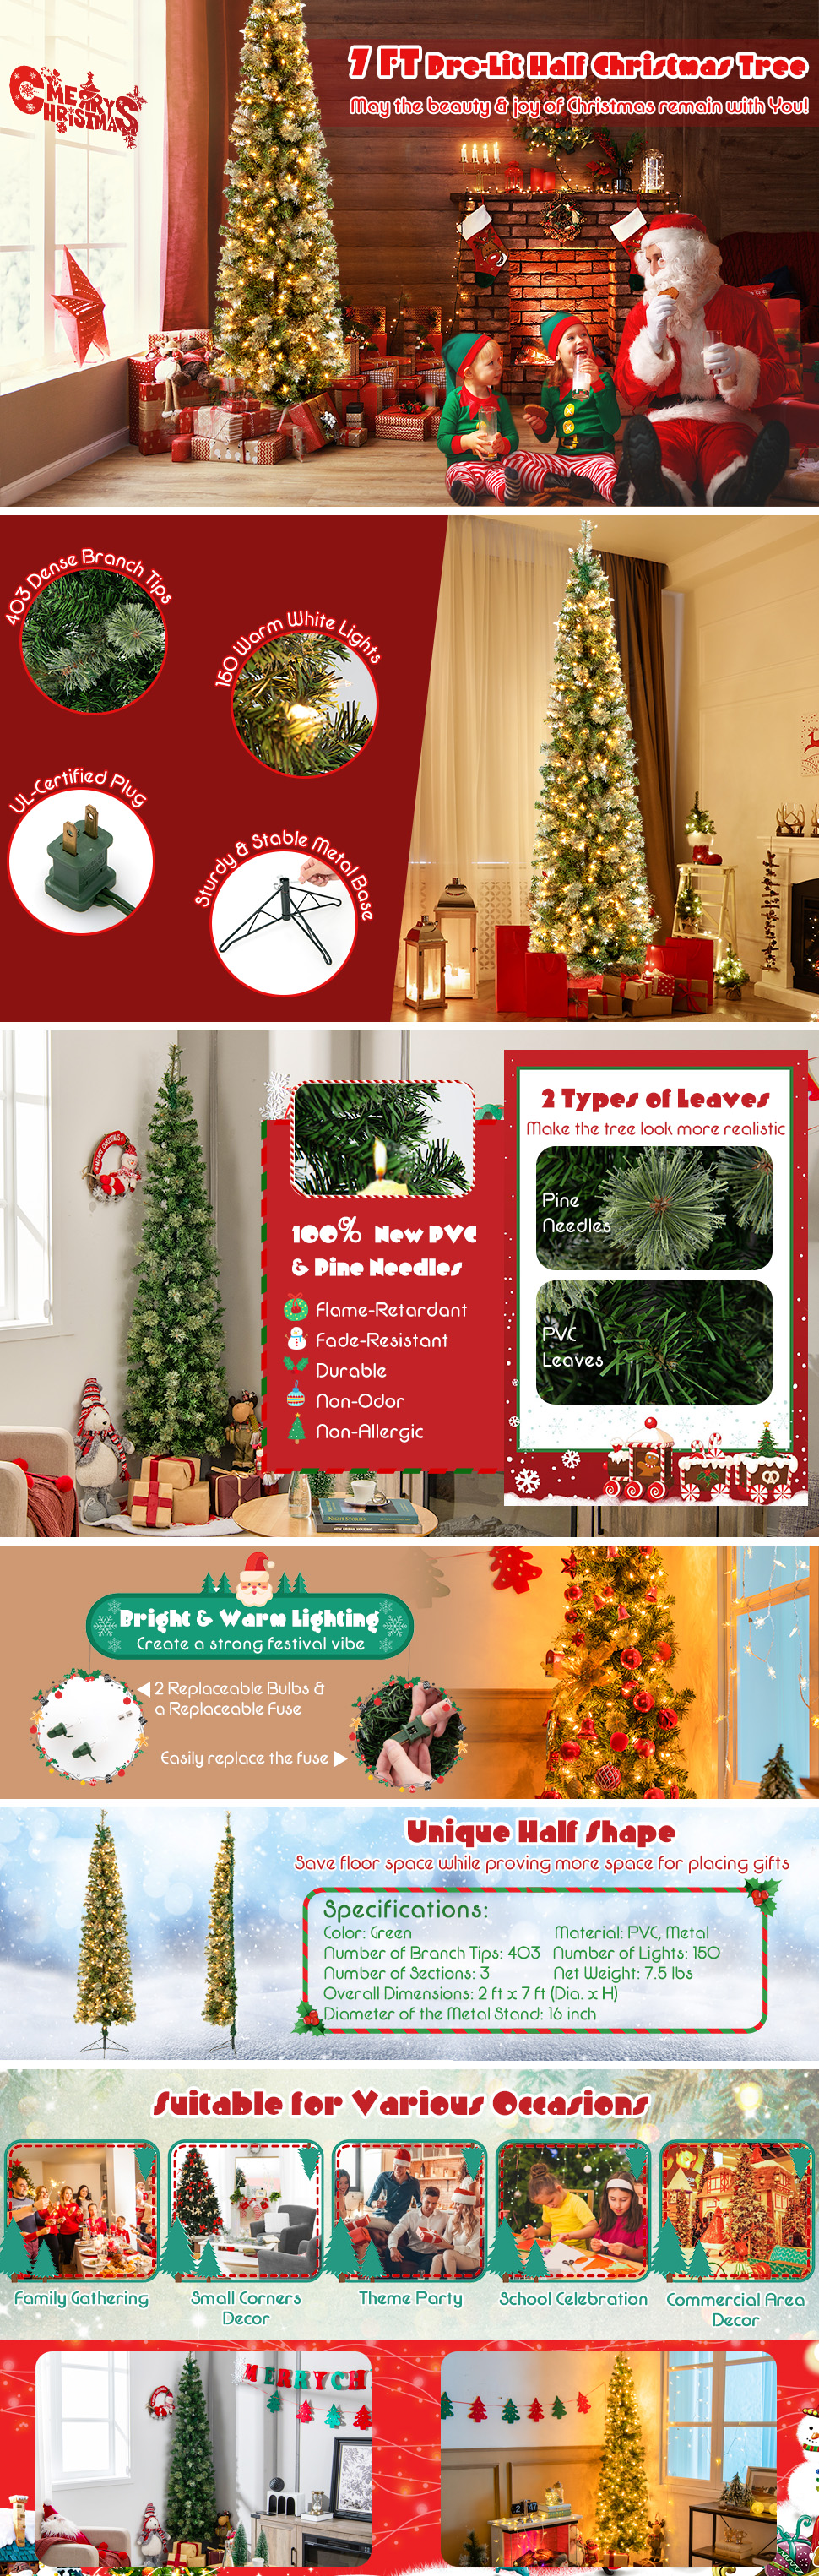 7 Feet Half Christmas Tree with Pine Needles and 150 Lights